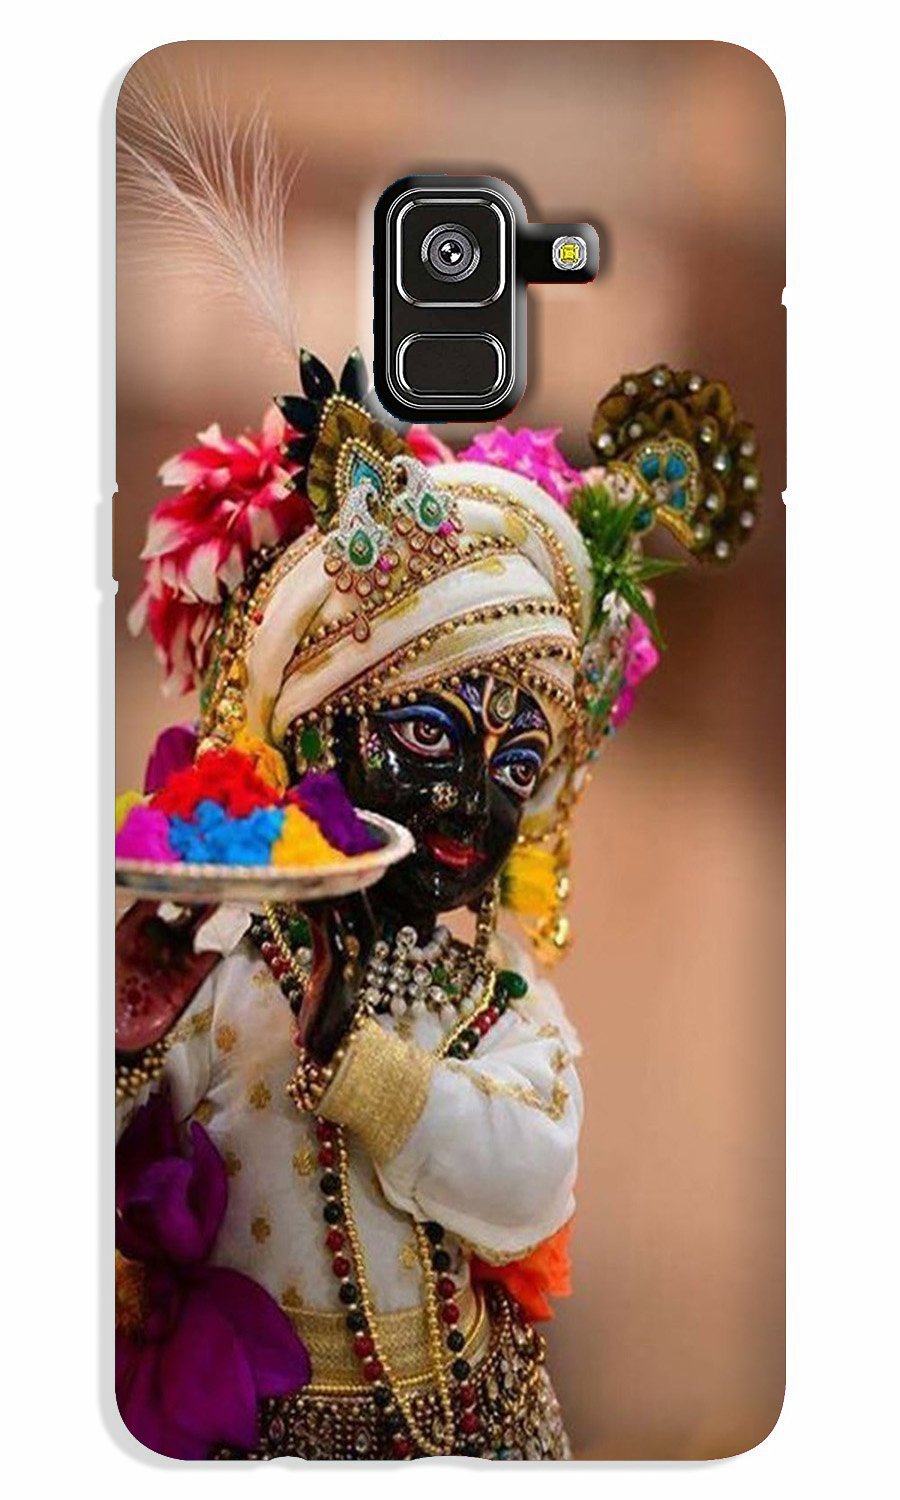 Lord Krishna2 Case for Galaxy A8 Plus